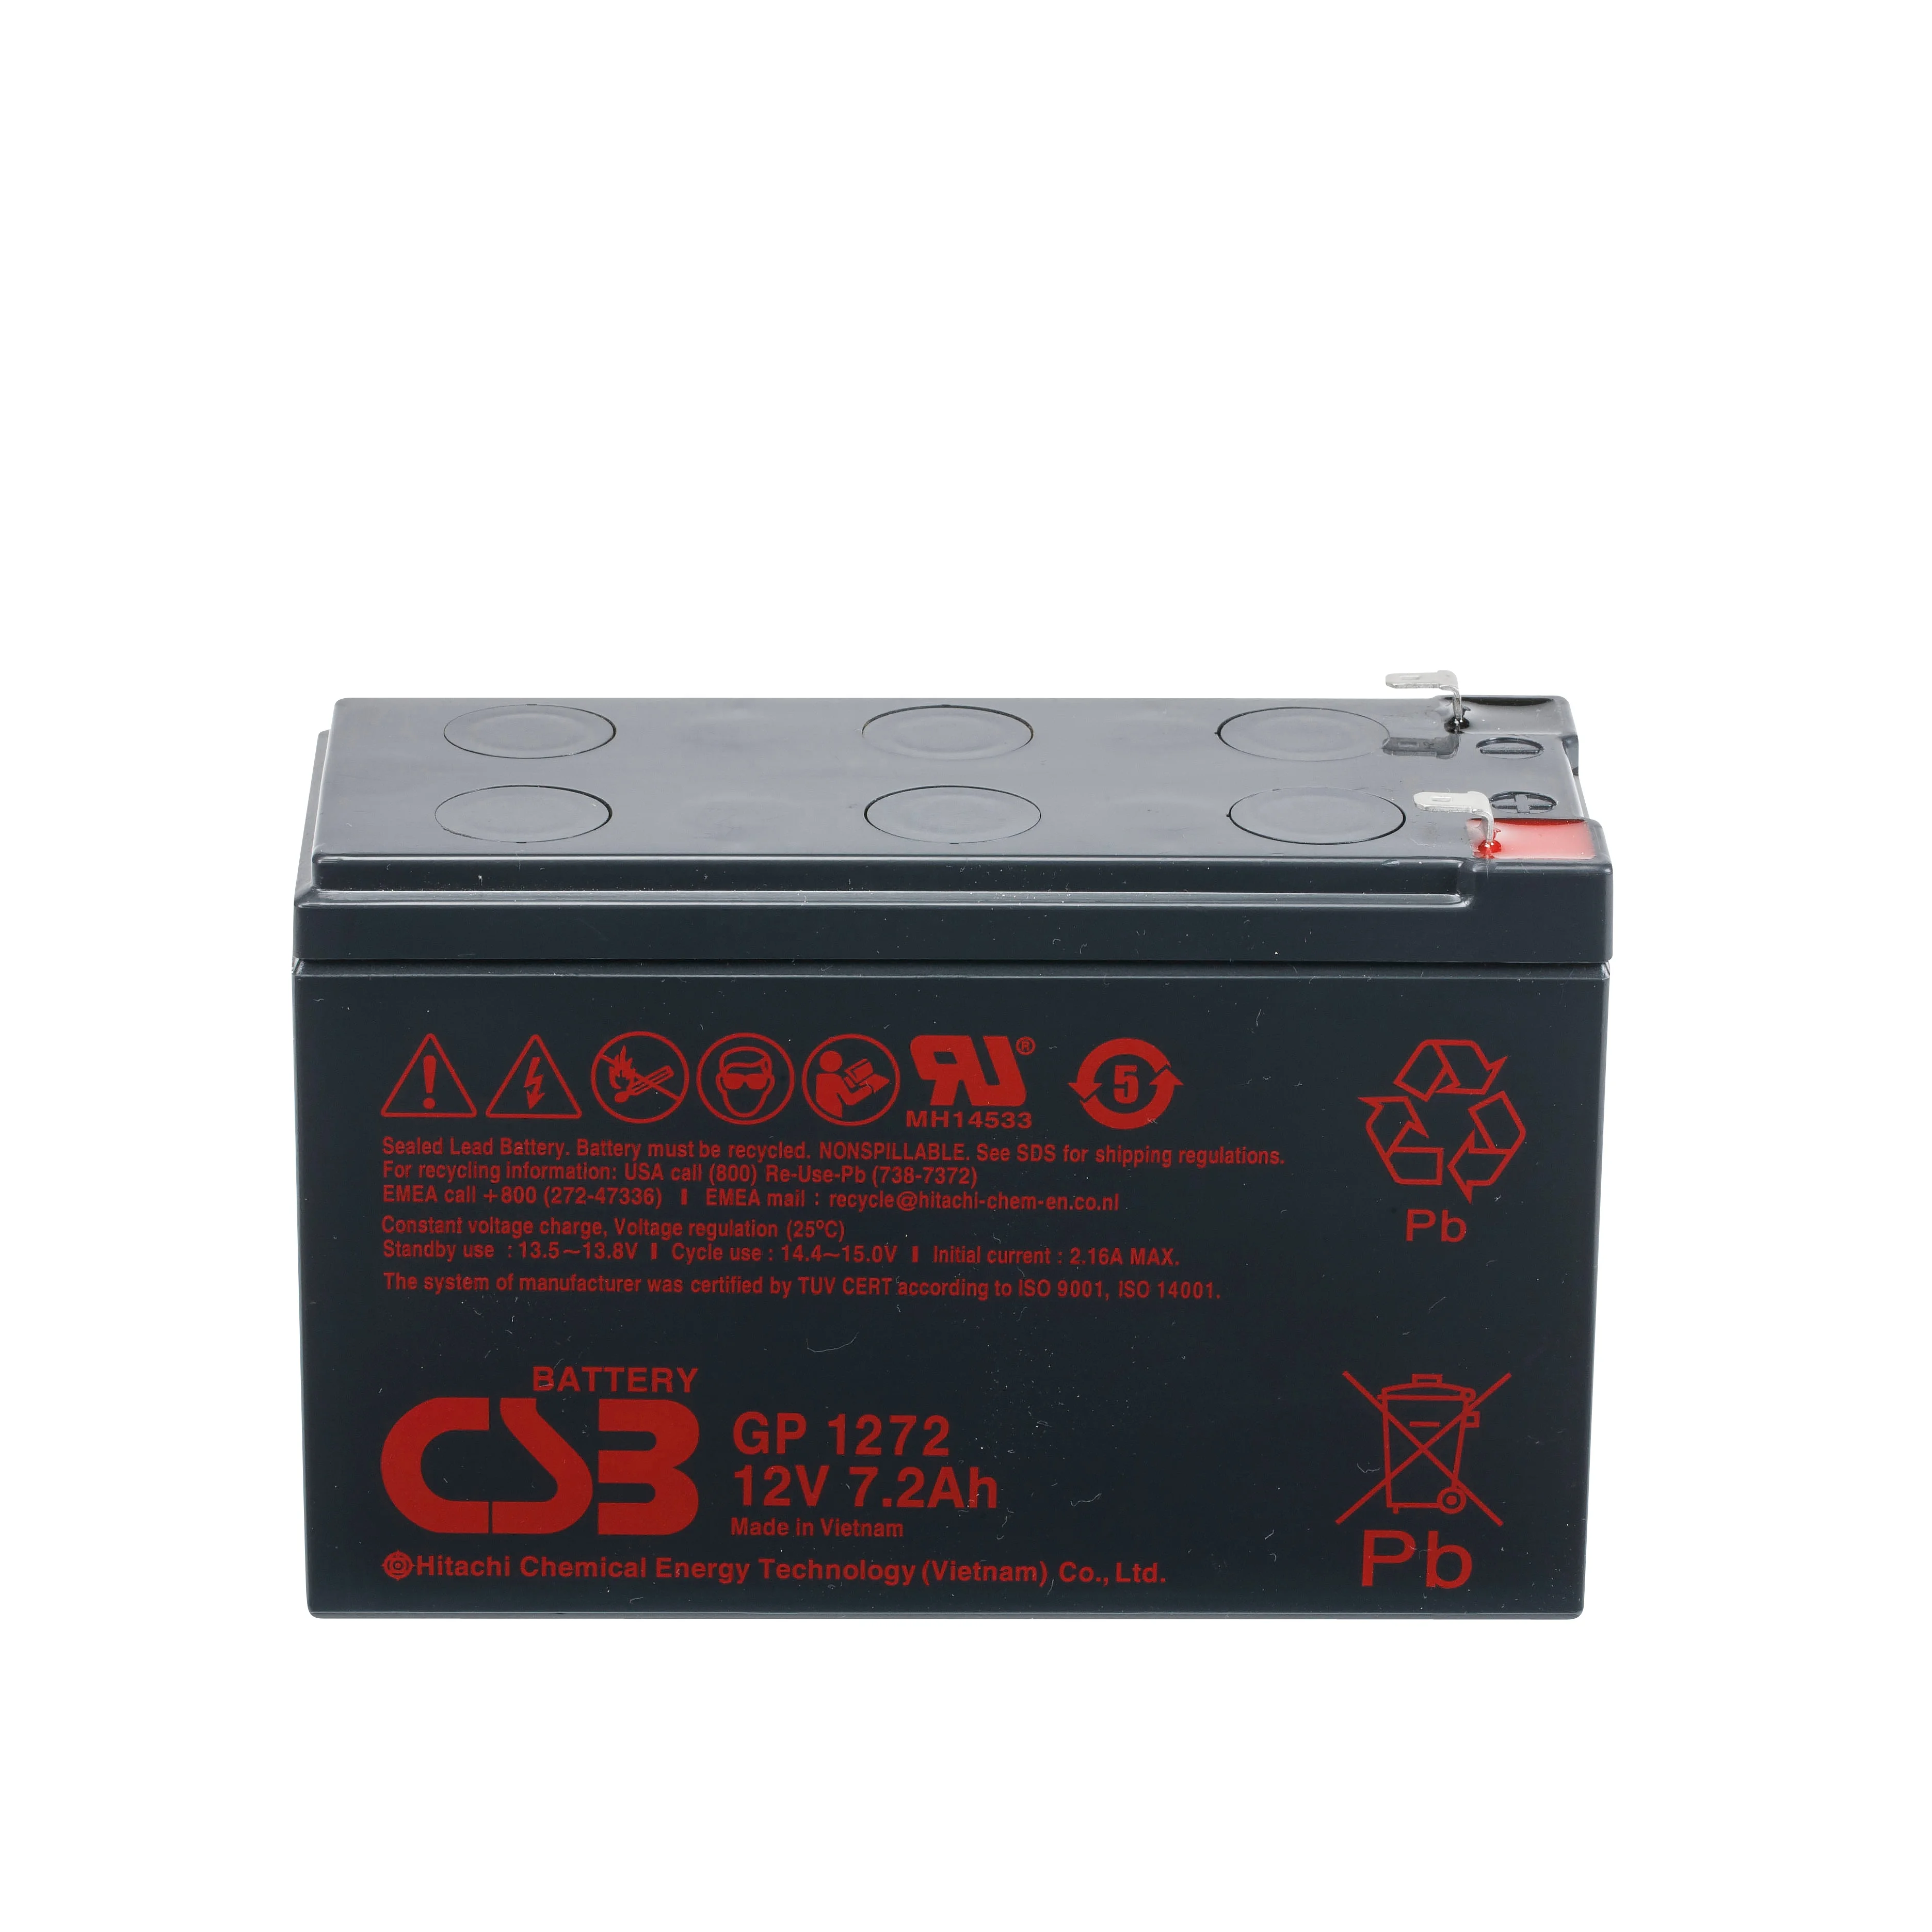 Gp 1272 12v. Батарея CSB GP 1272 f2 (12v, 7.2Ah). Аккумуляторная батарея CSB gp1272 f2. Аккумуляторная батарея CSB ups 12460 9 а·ч. Аккумулятор CSB (gp1272/gp1272f) 12v 7.2Ah.